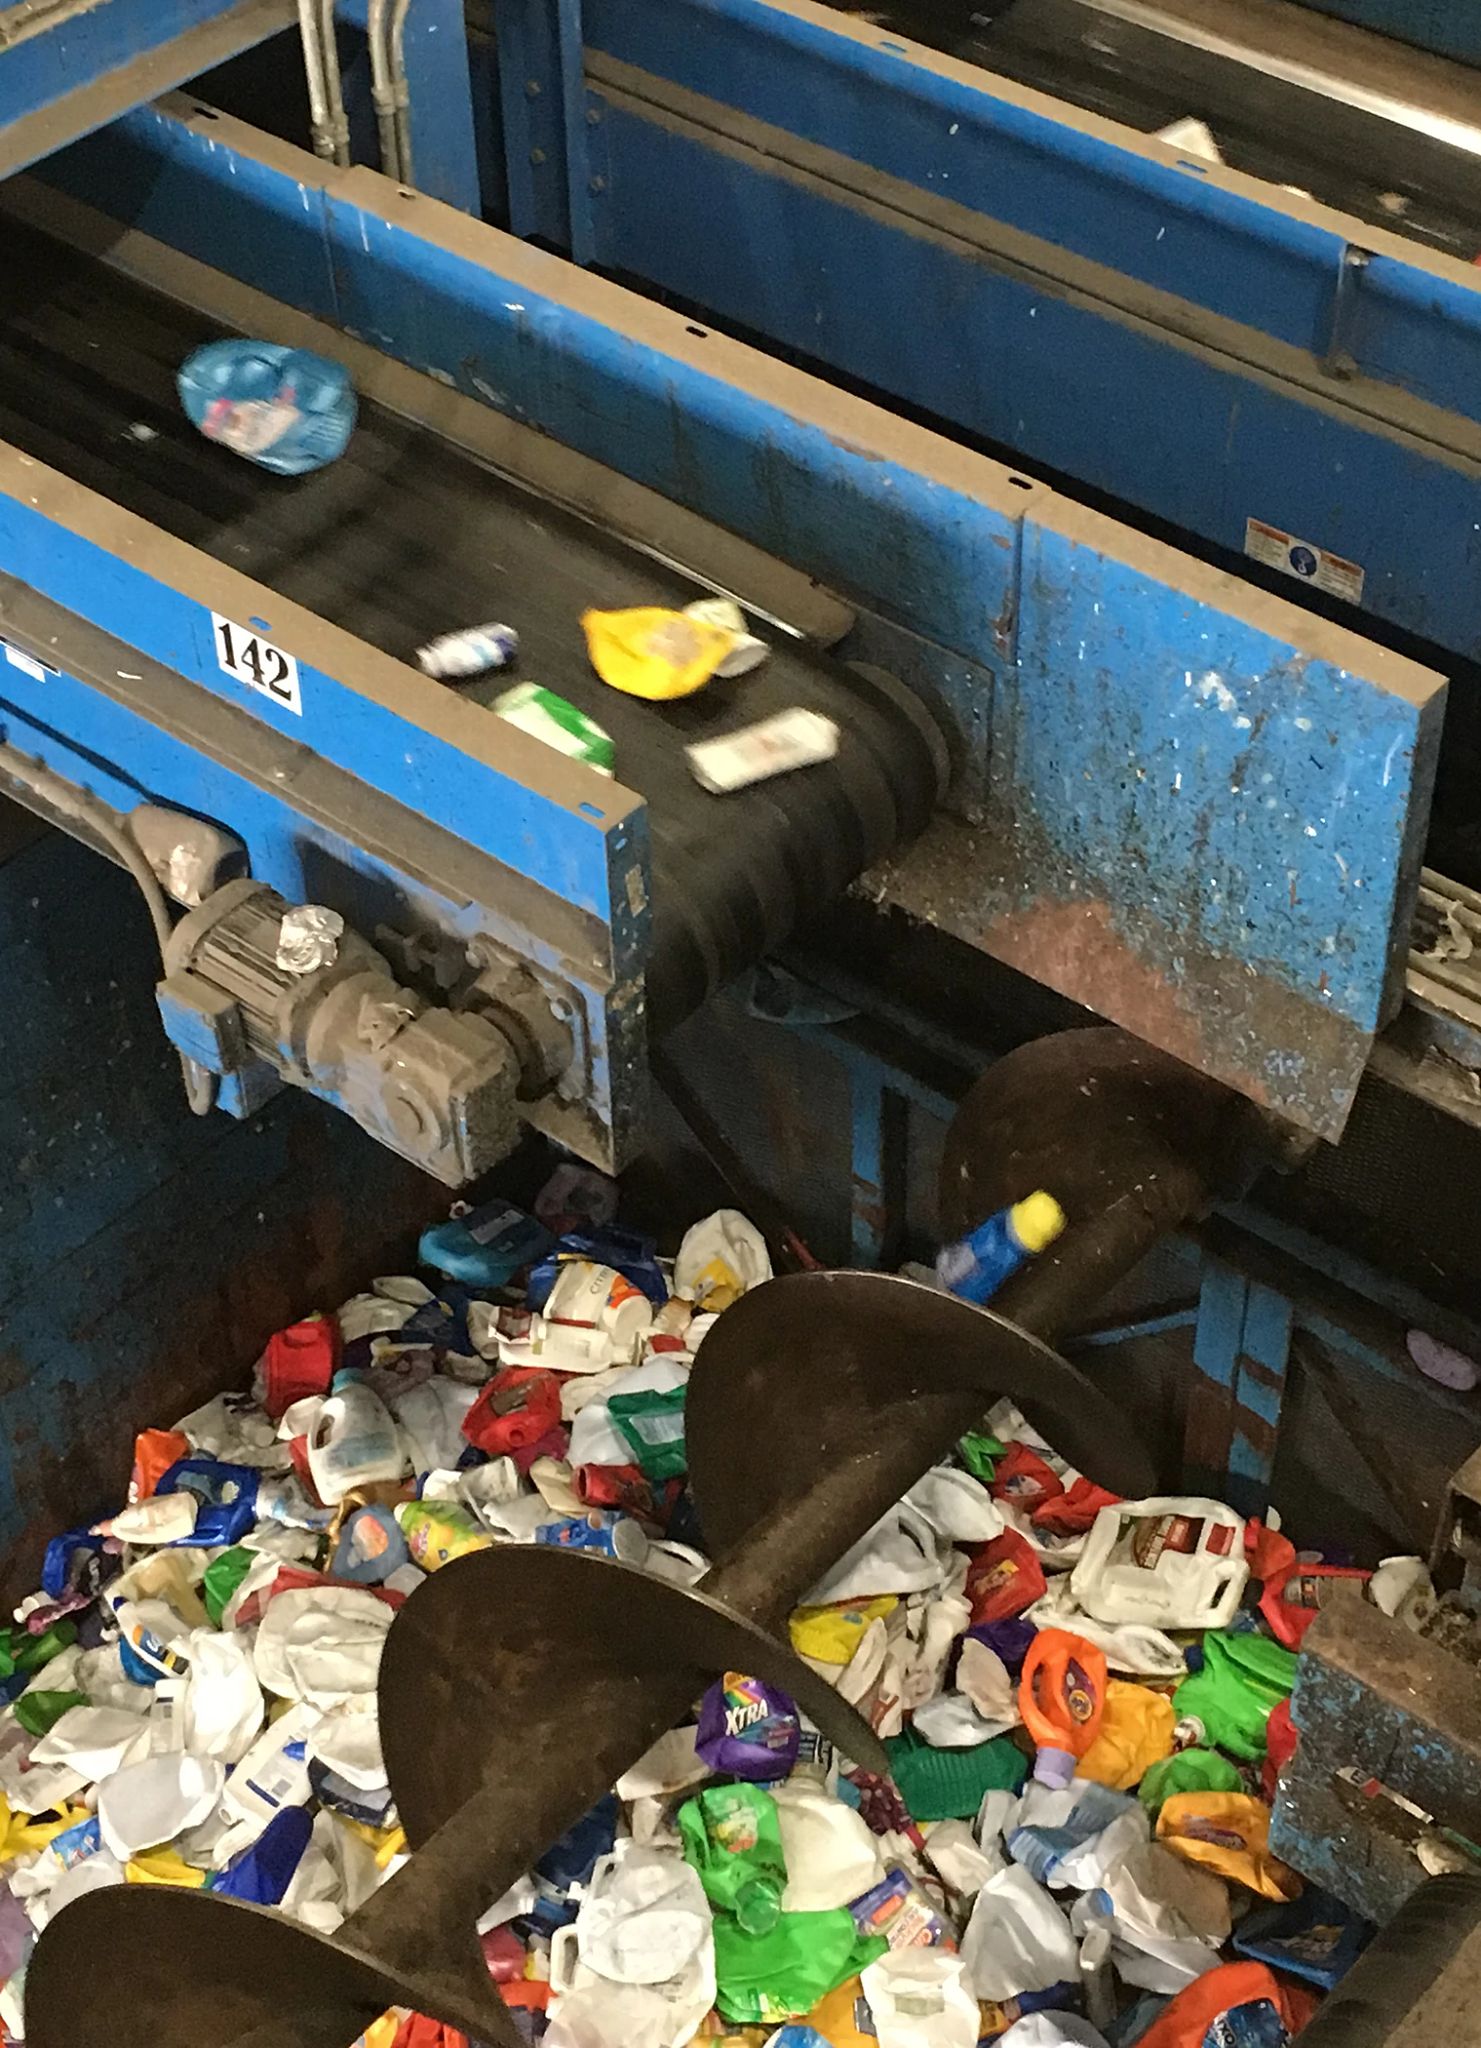 Plastic Utensils Go in the Trash - Stockton Recycles